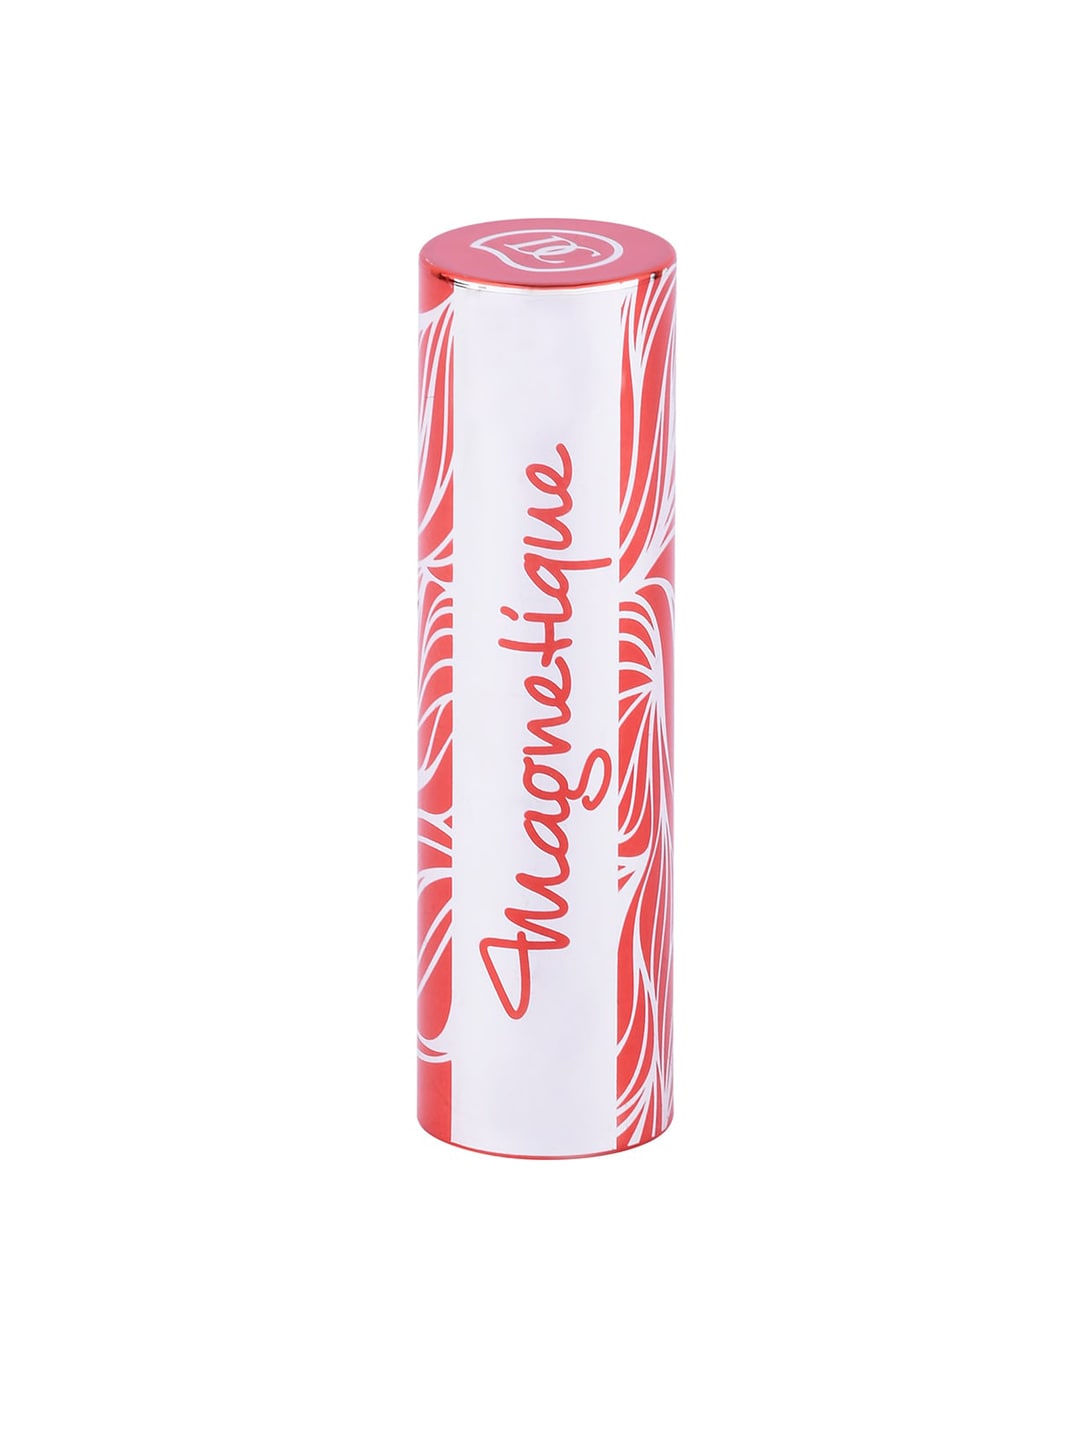 Dermacol Magnetique Lipstick No.1 4.4g Price in India